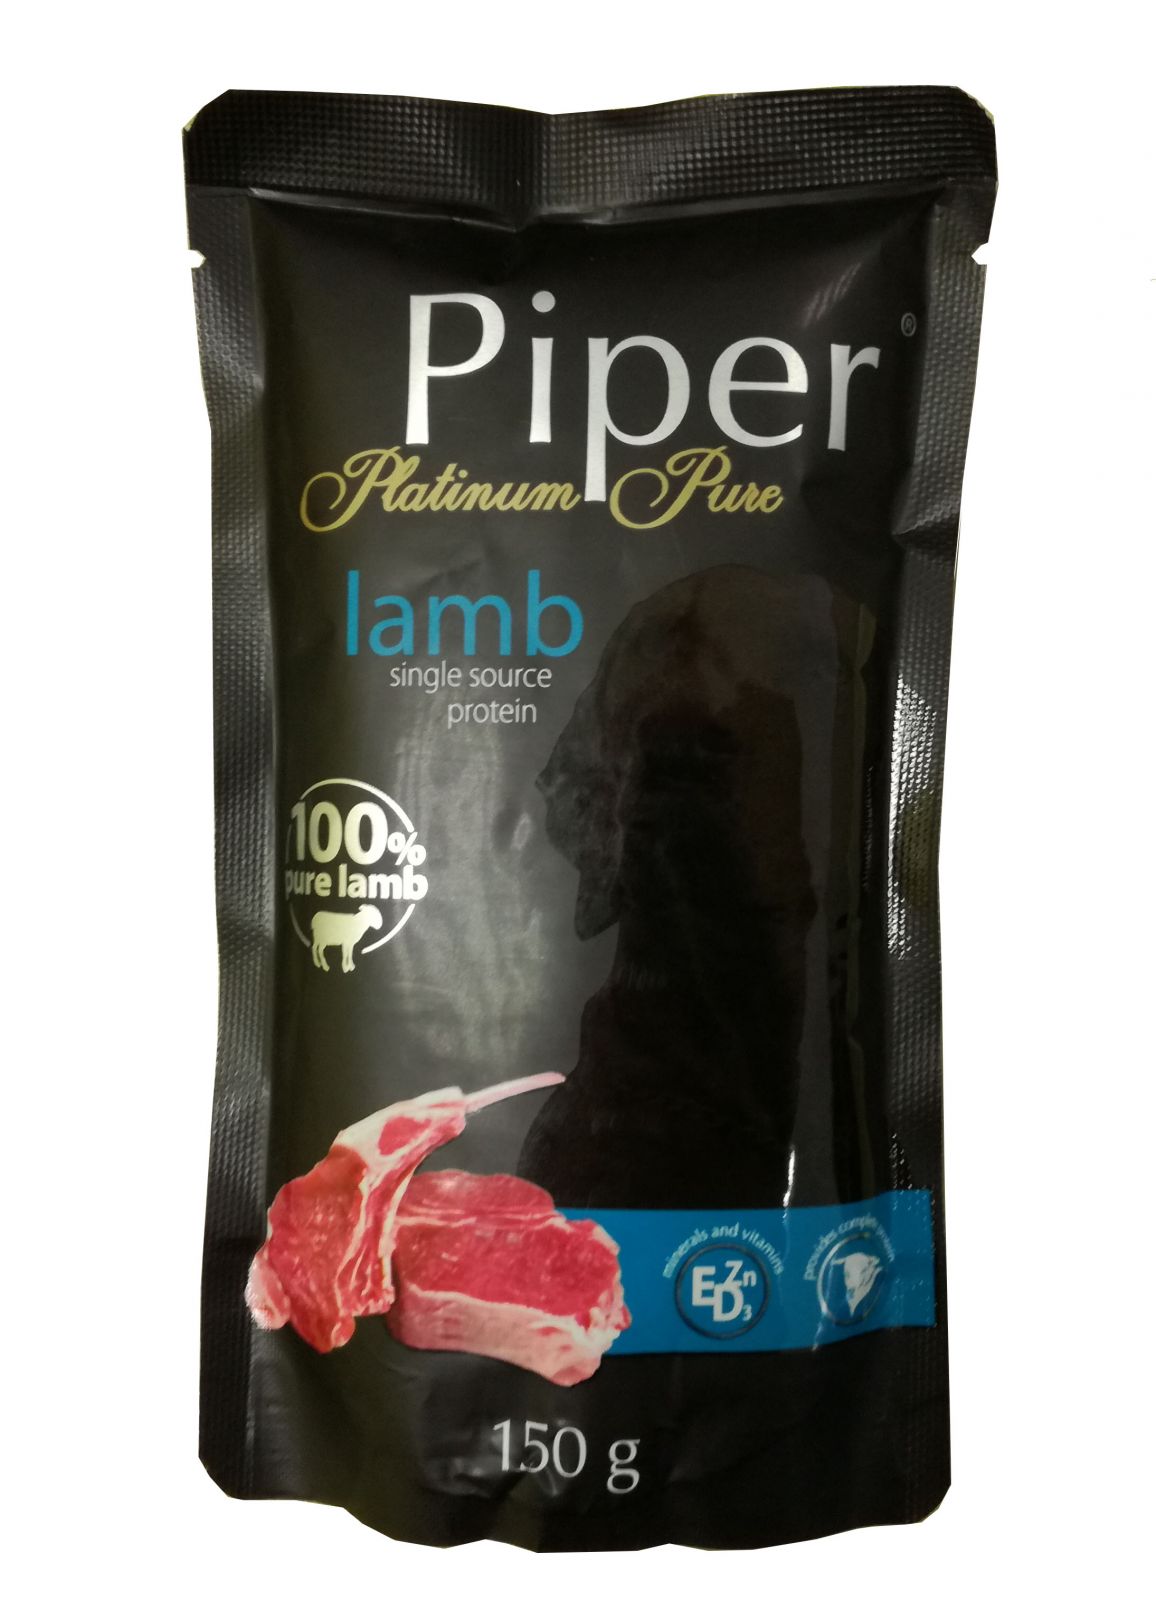 Piper Platinum Pure - Pure Lamb 150g